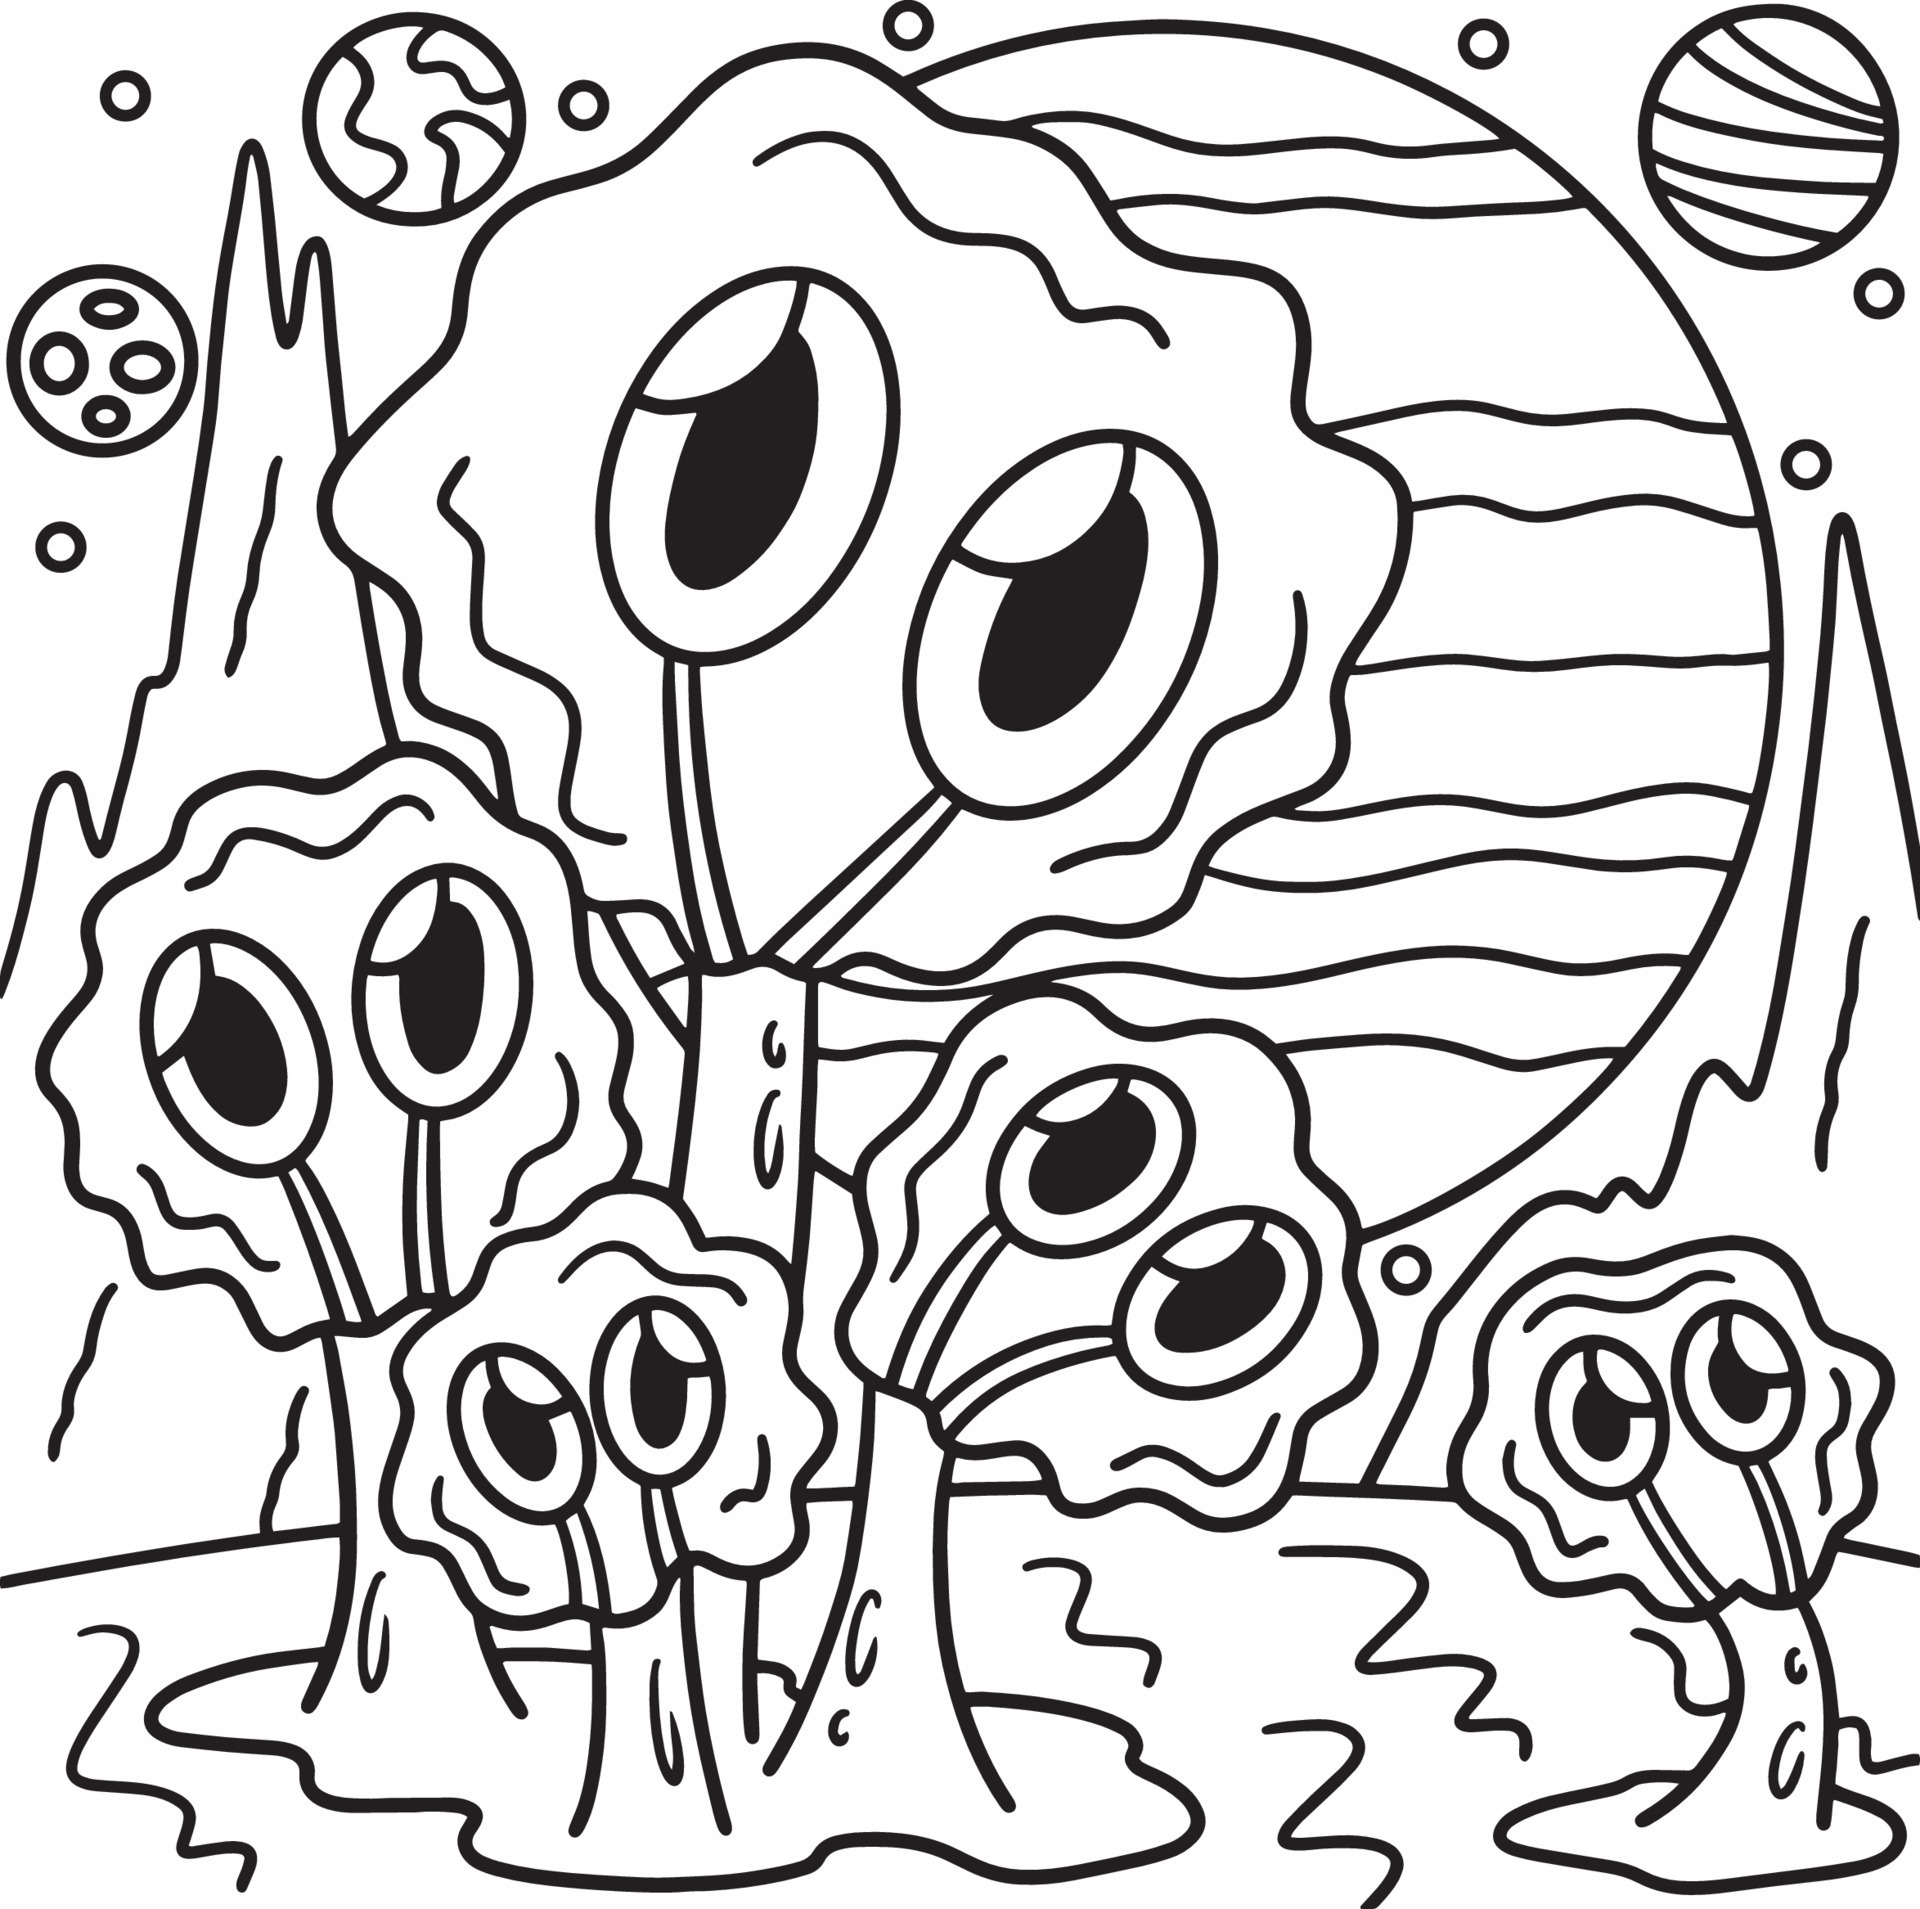 Arte de estilo de livro de colorir infantil Alien Simple Line Art